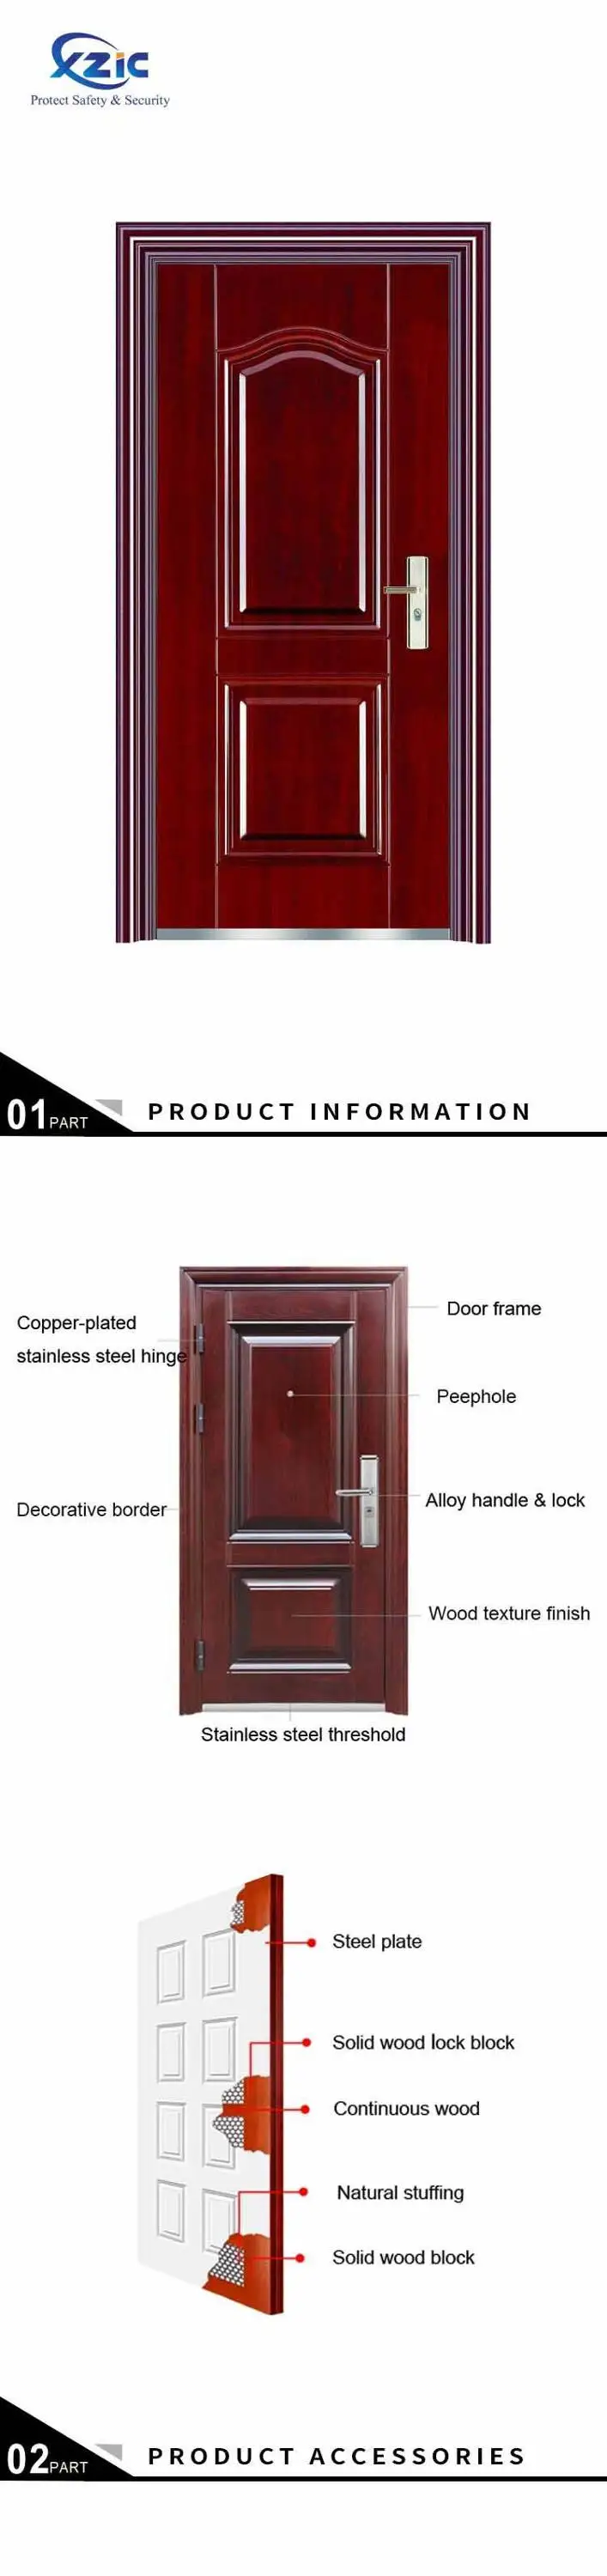 Residential wrought iron door inserts steel wood security screen doors and frames